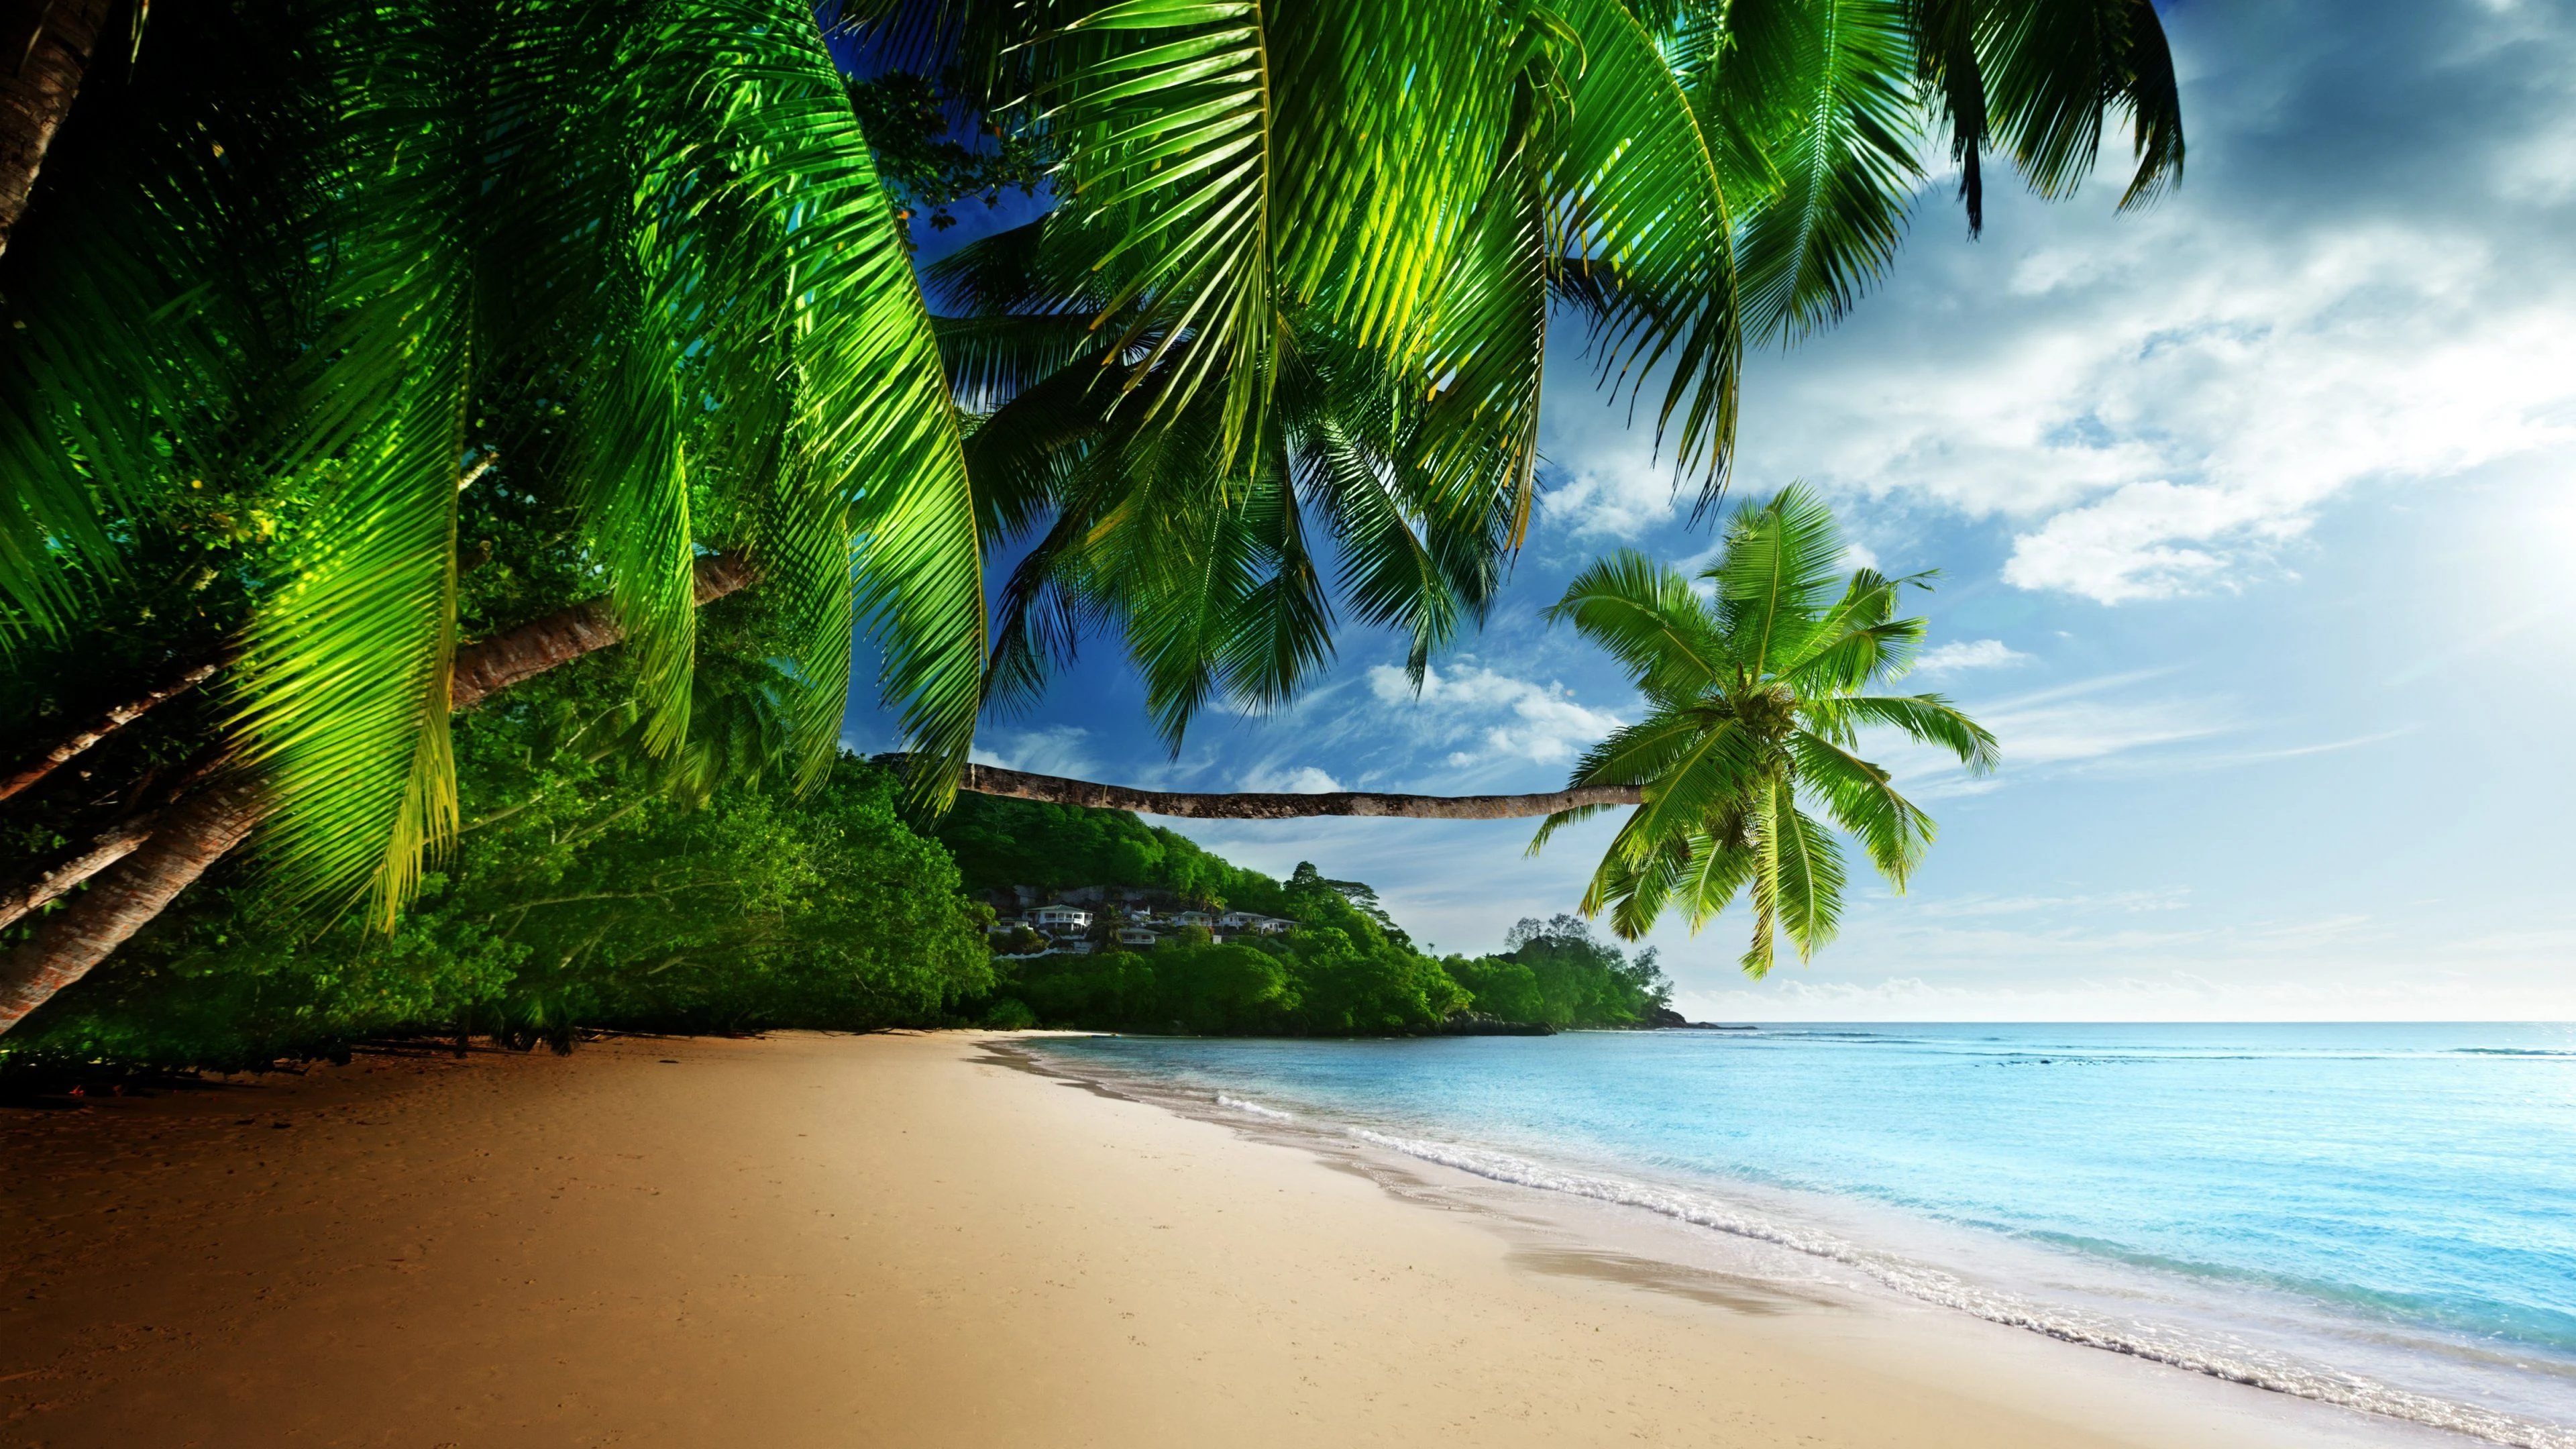 3840x2160 4K Ultra HD Beach Desktop Wallpapers Top Free 4K Ultra HD Beach Desktop Backgrounds